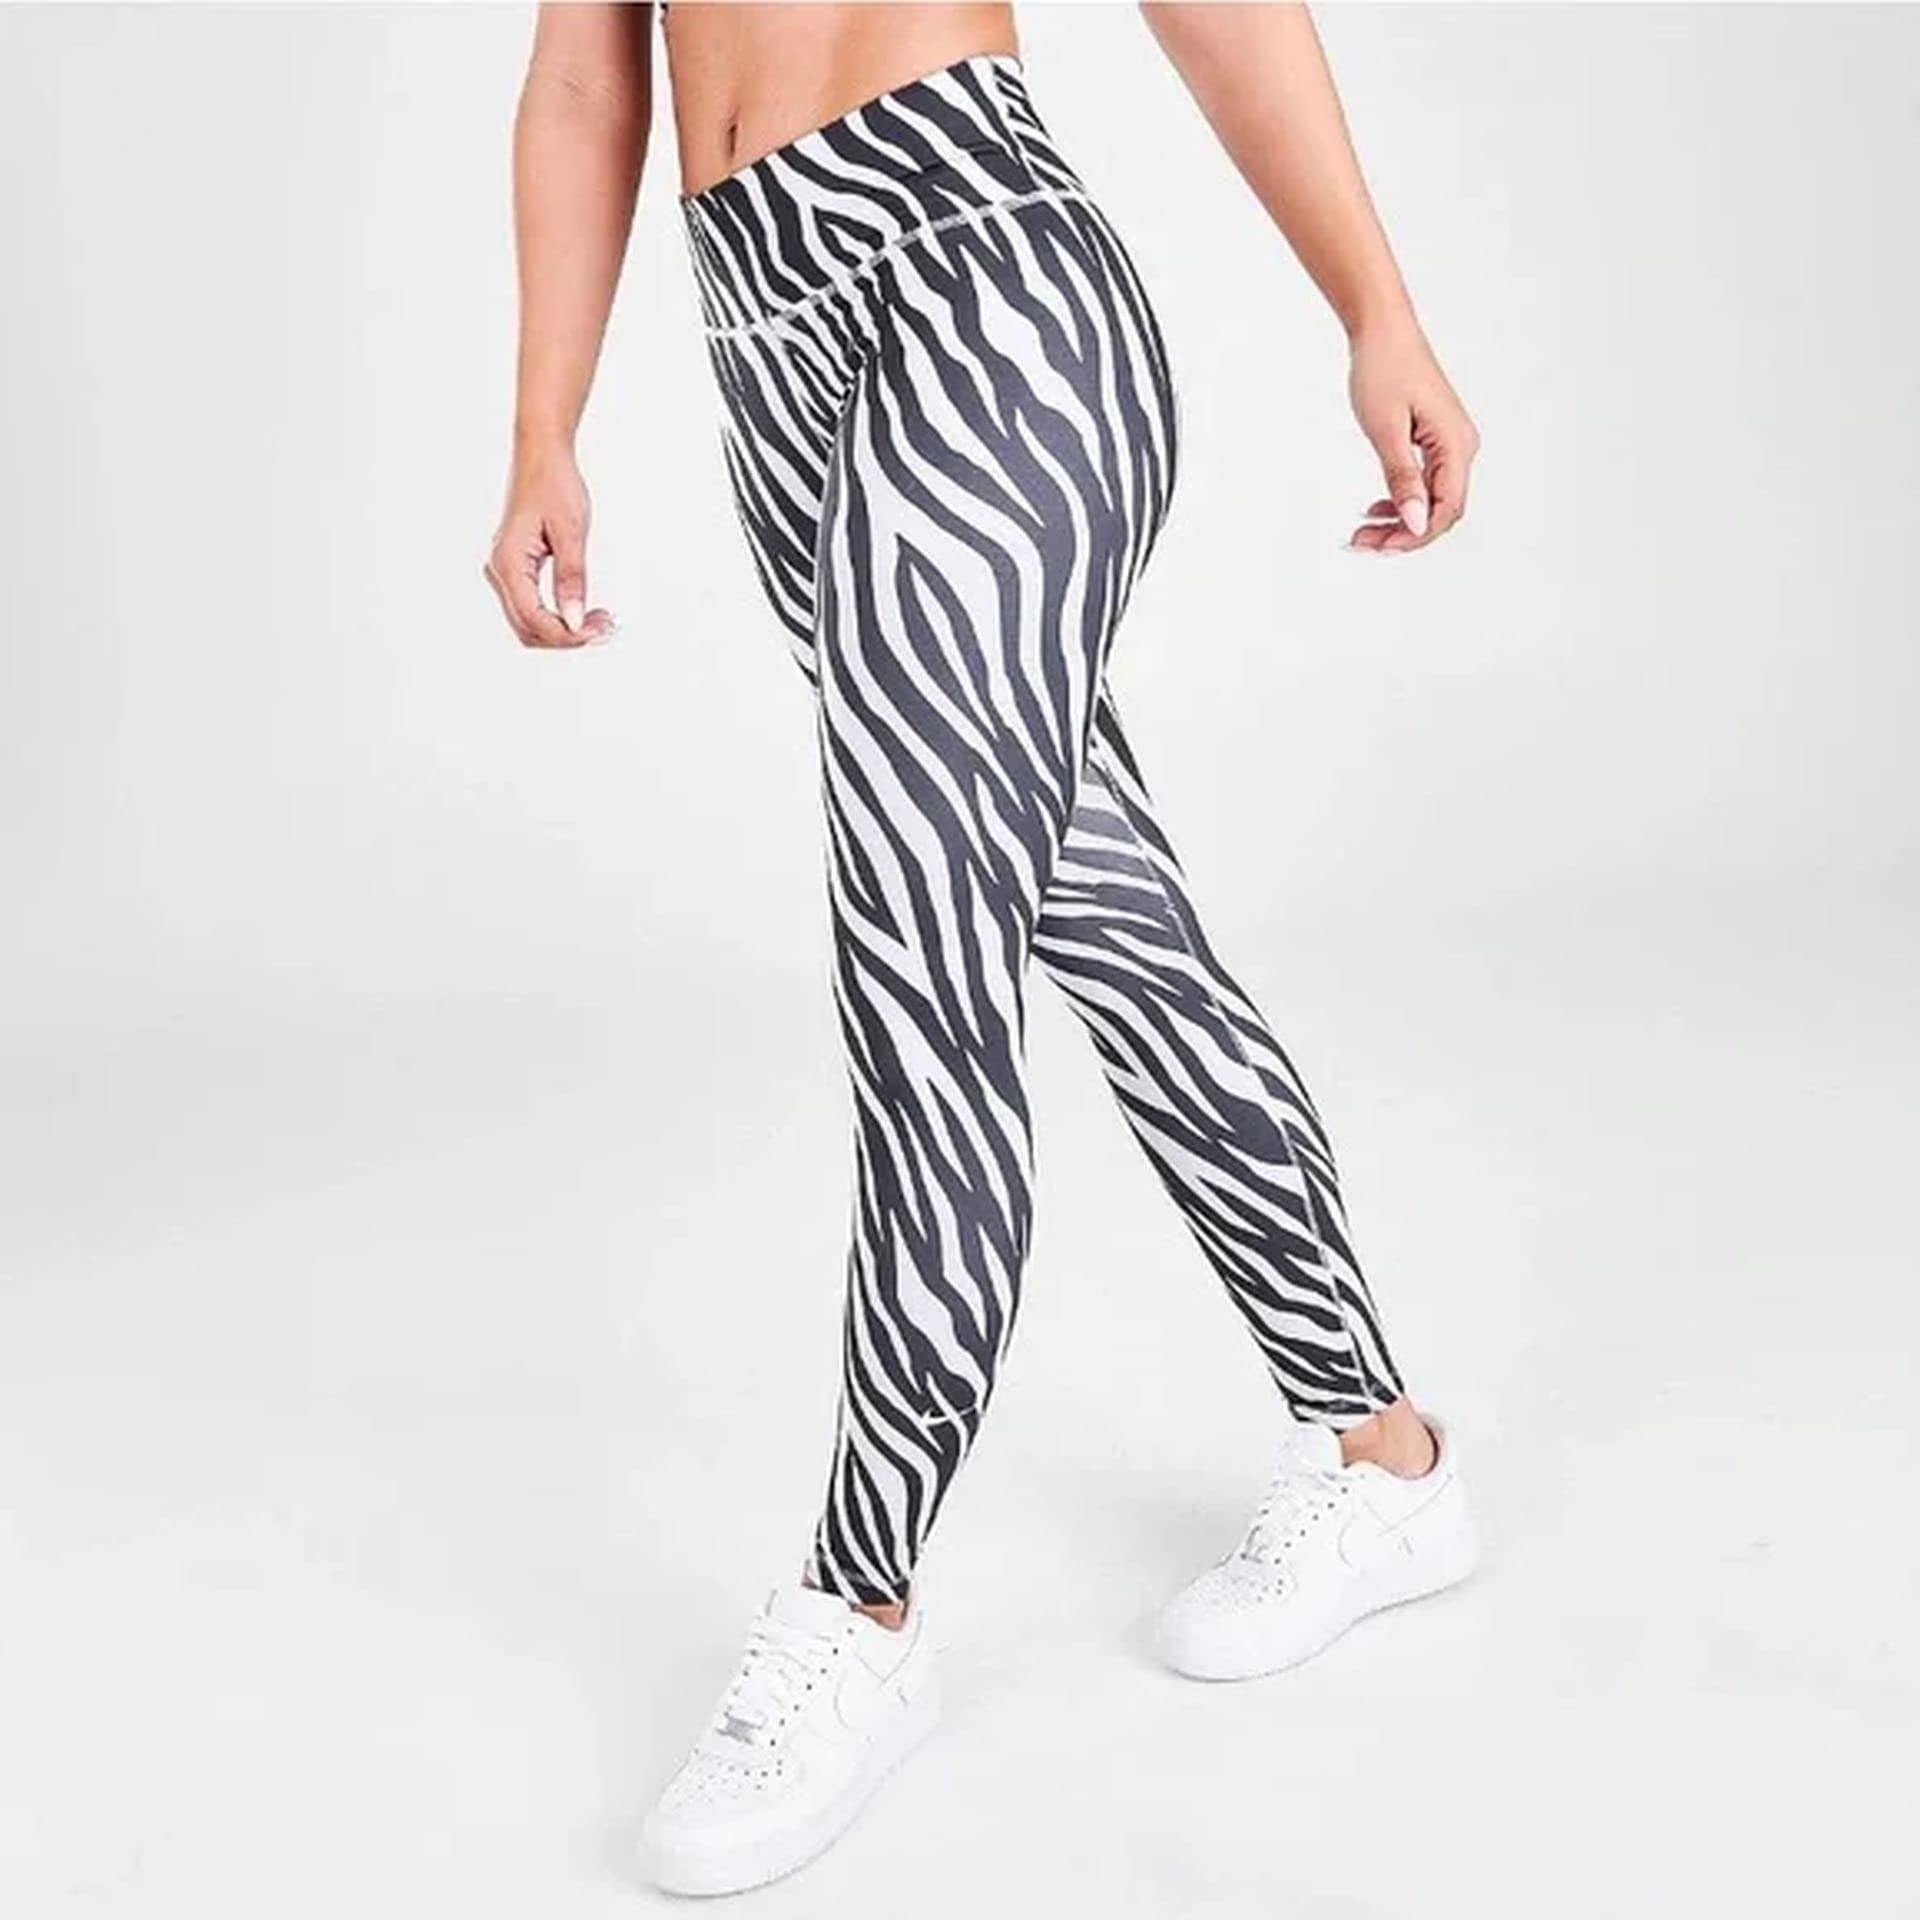 Nike Zebra Legging Womens Active Pants Size S, Color: Grey Zebra